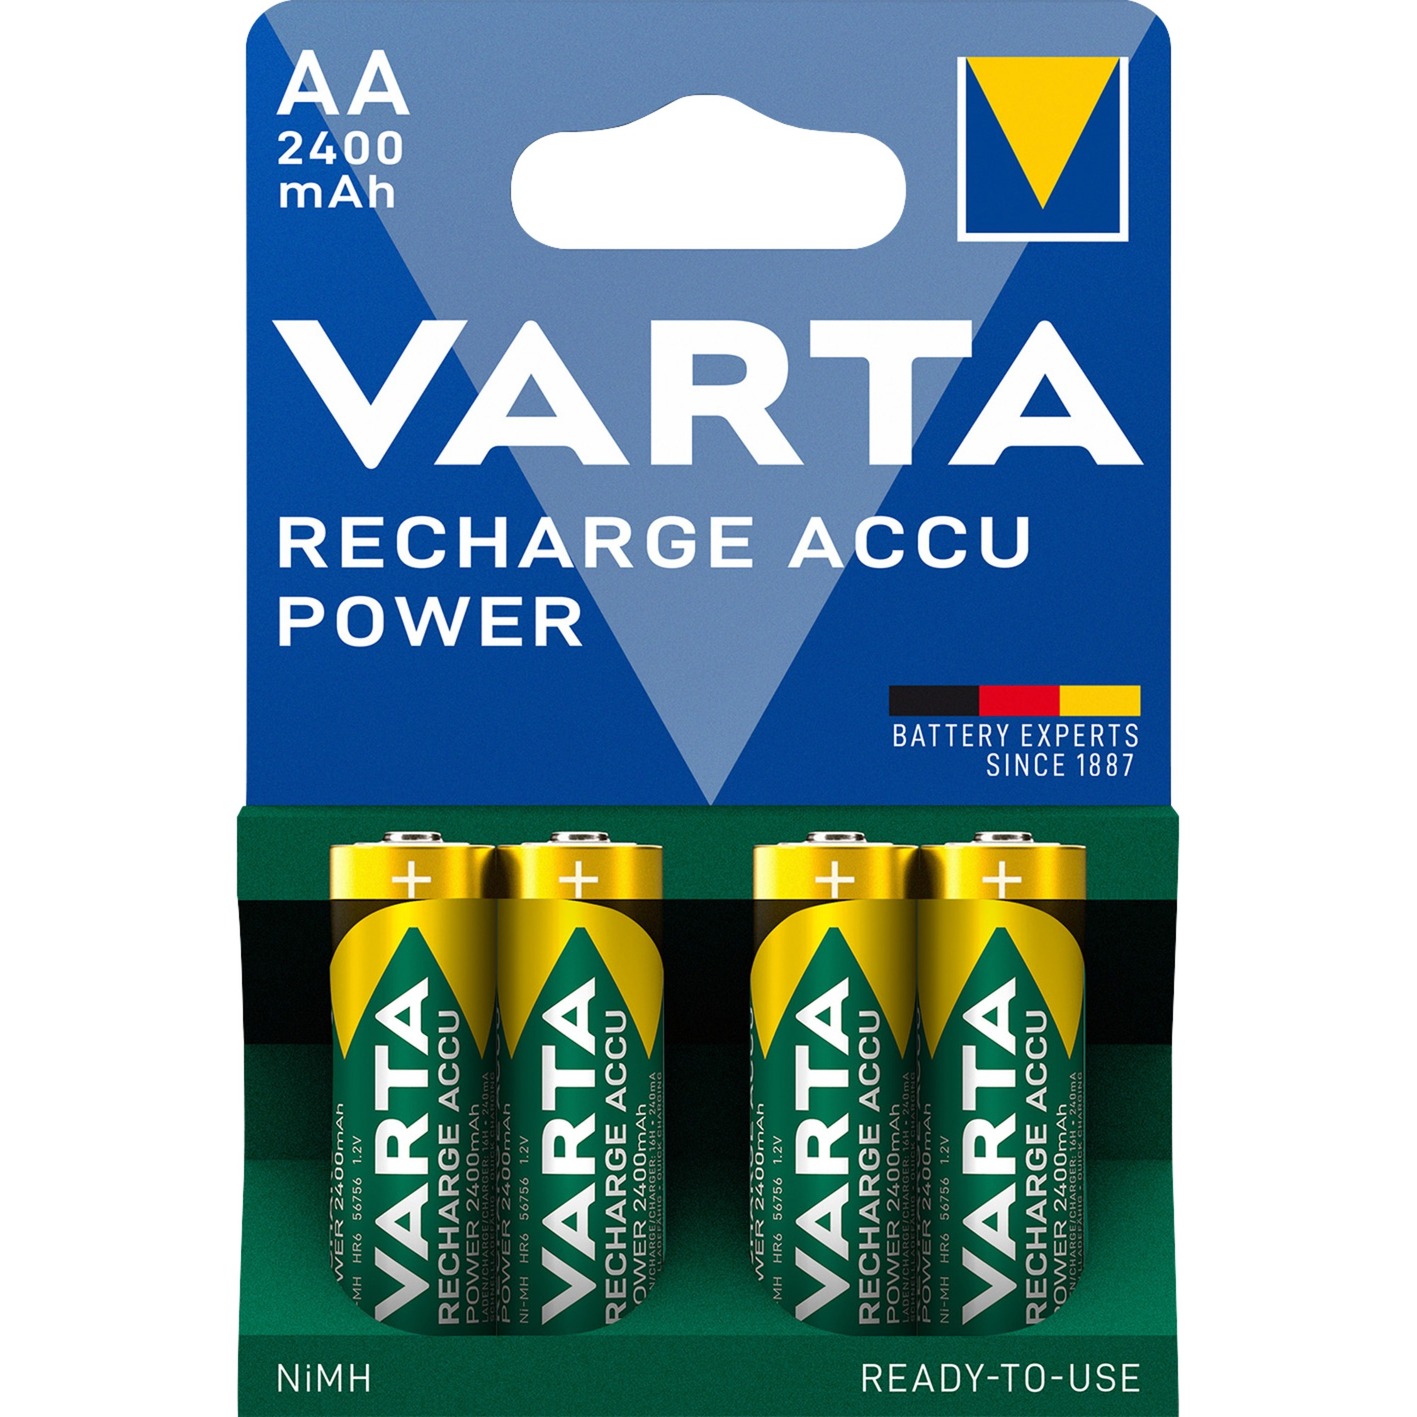 Recharge Accu Power AA, Akku von Varta